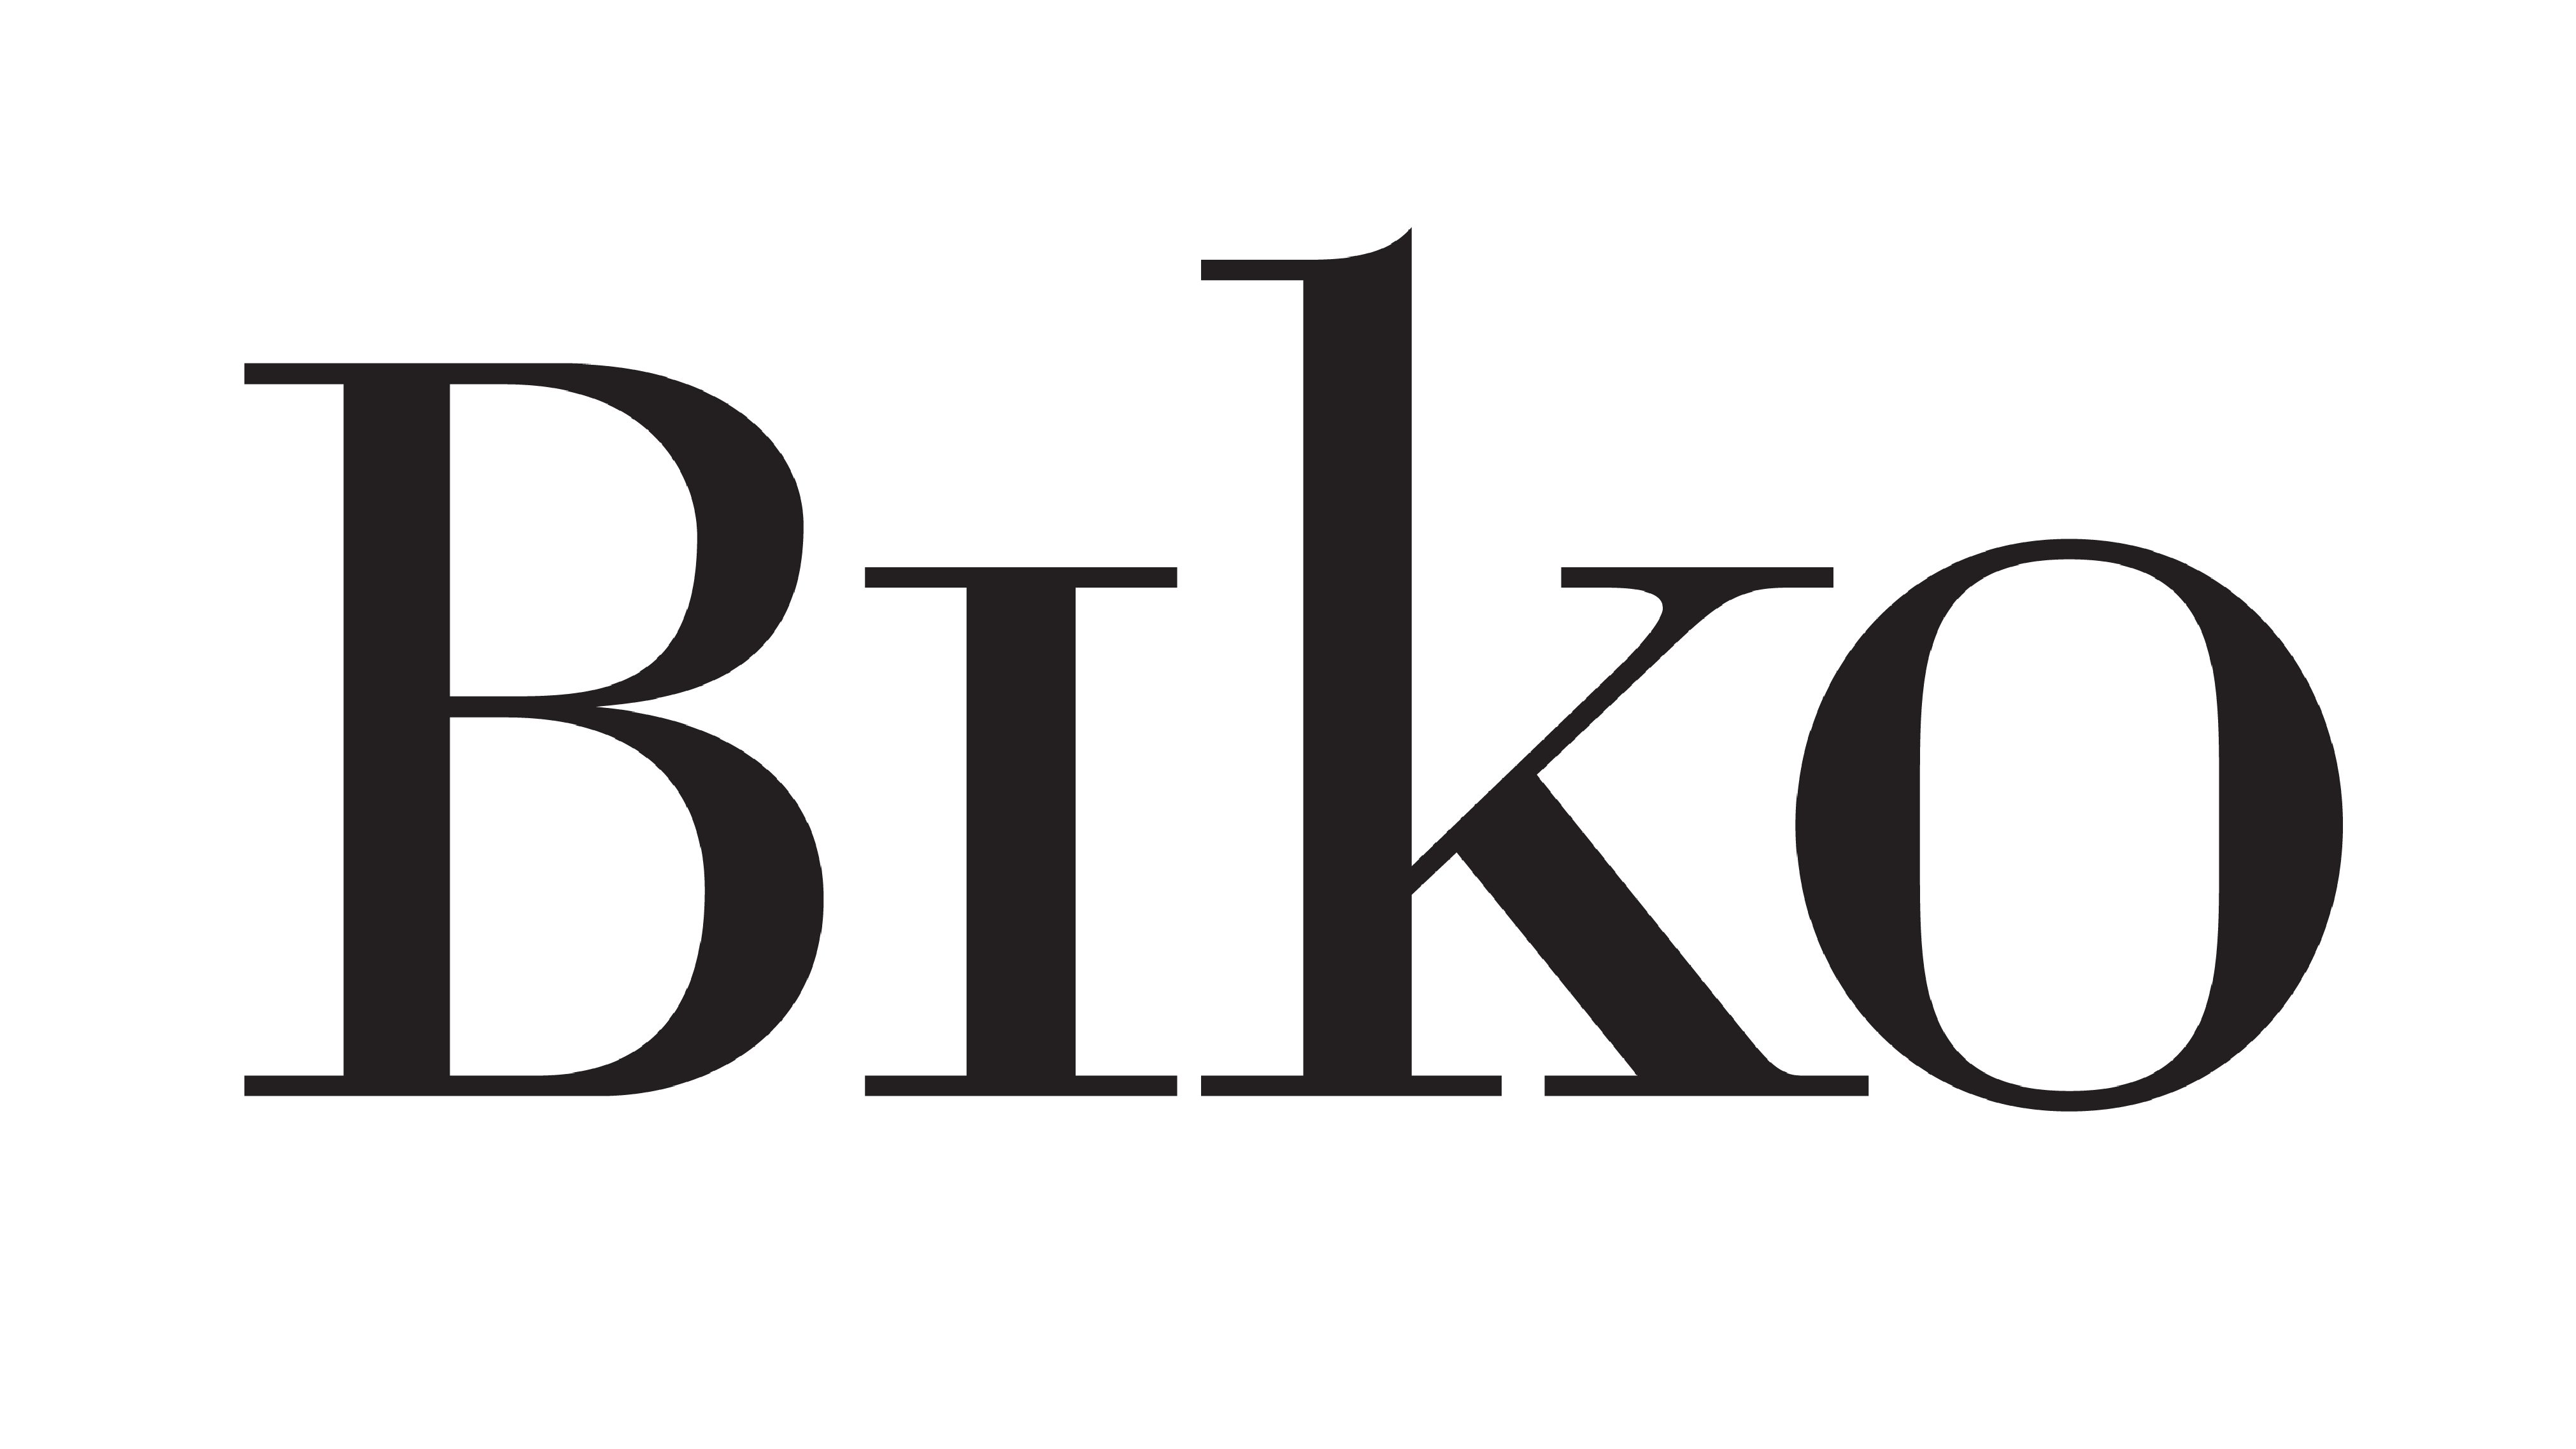 Biko